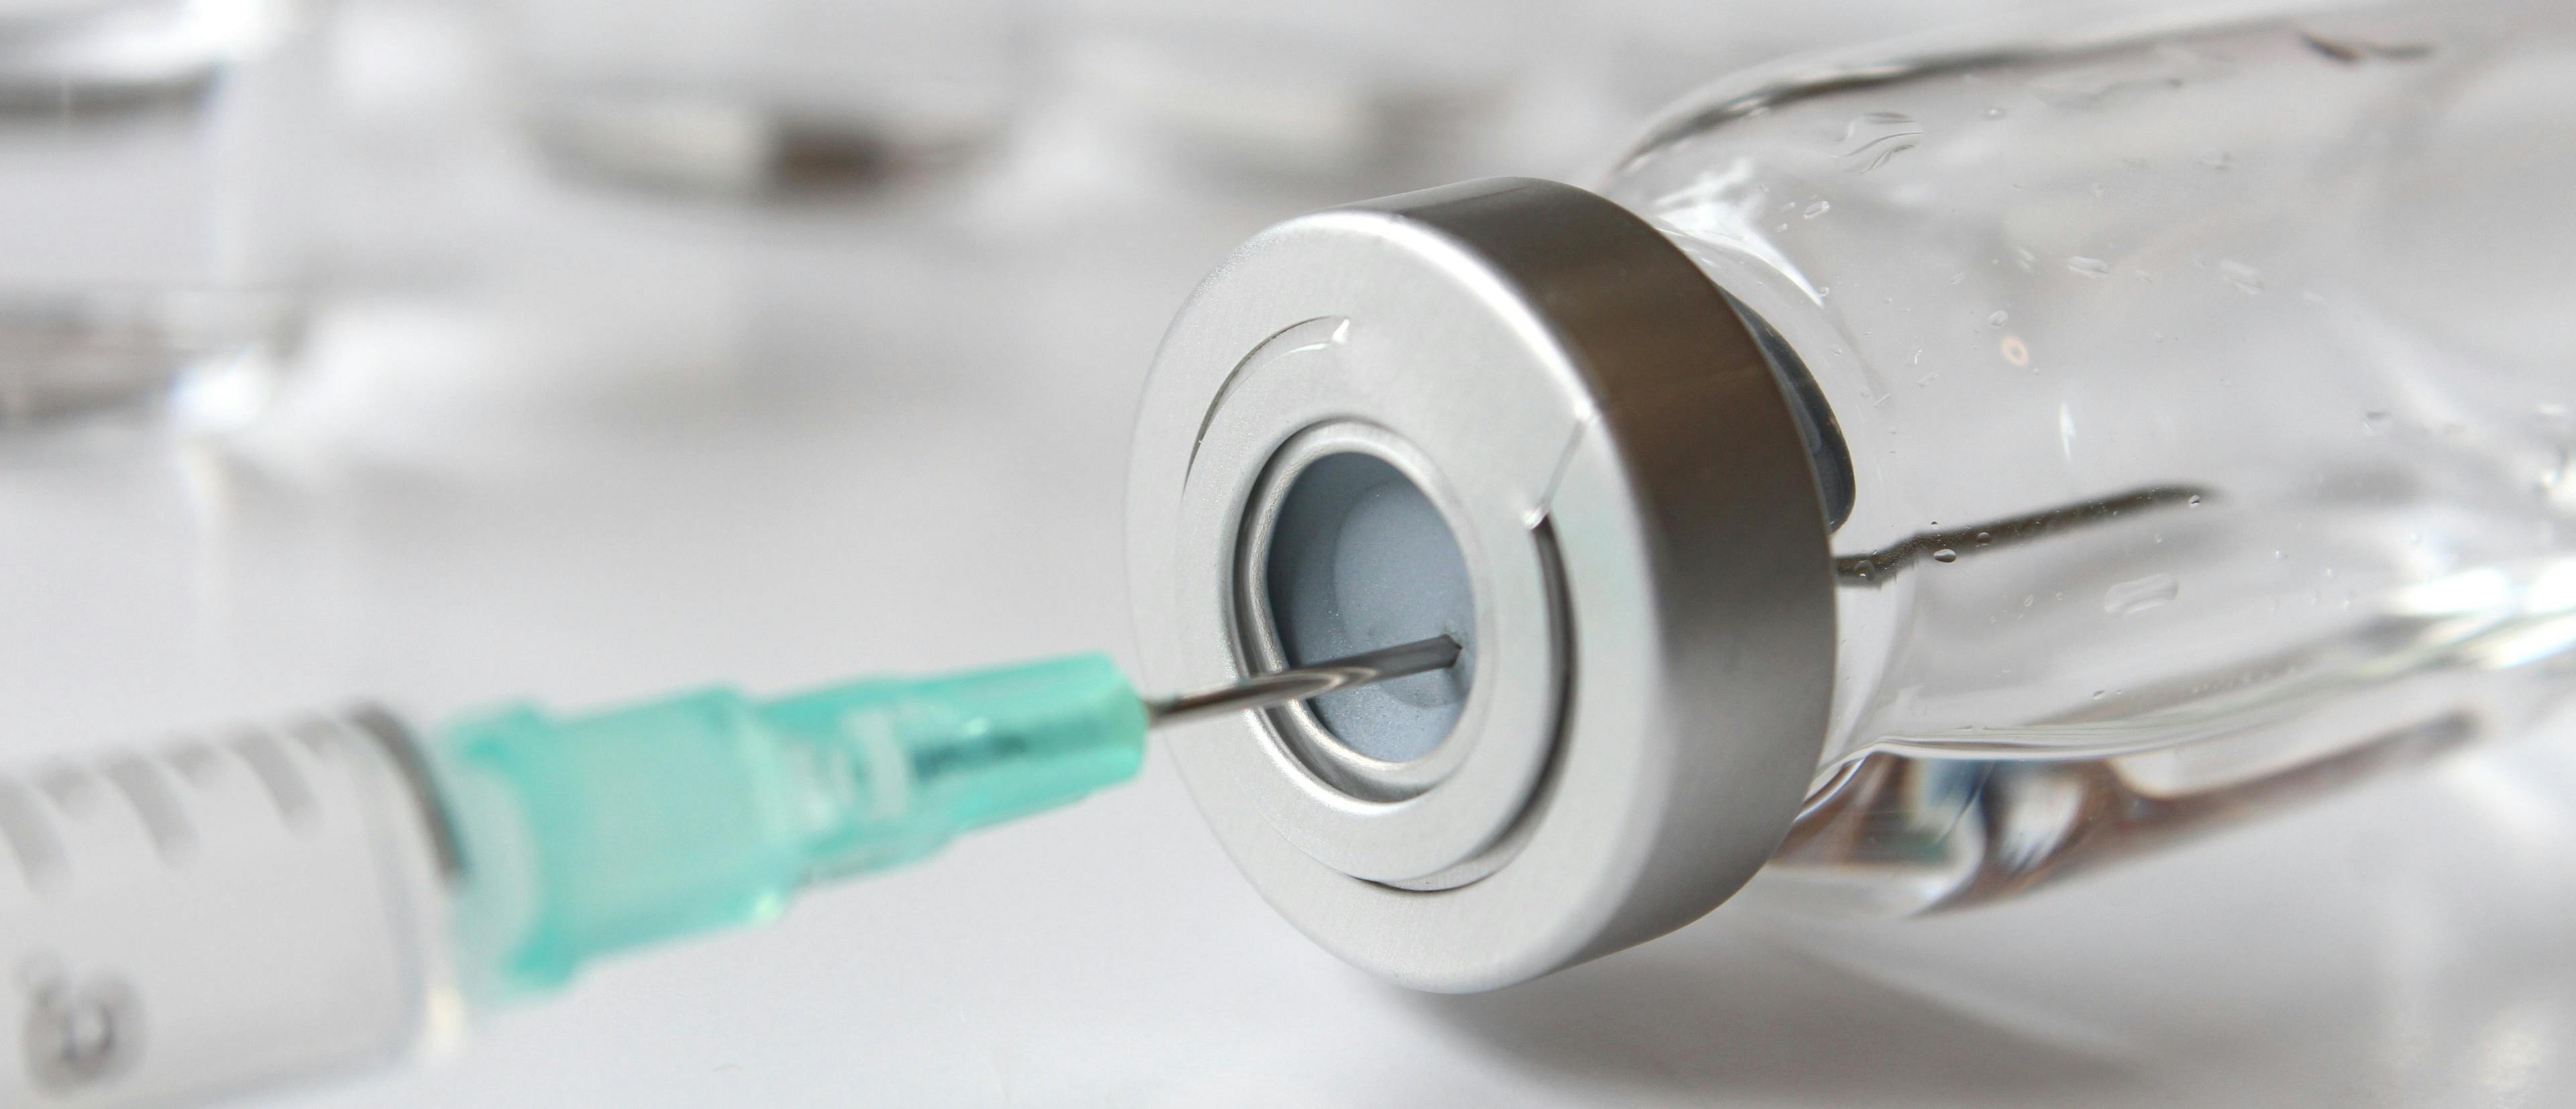 Pharmacist-Provided Flu Shots Please Patients